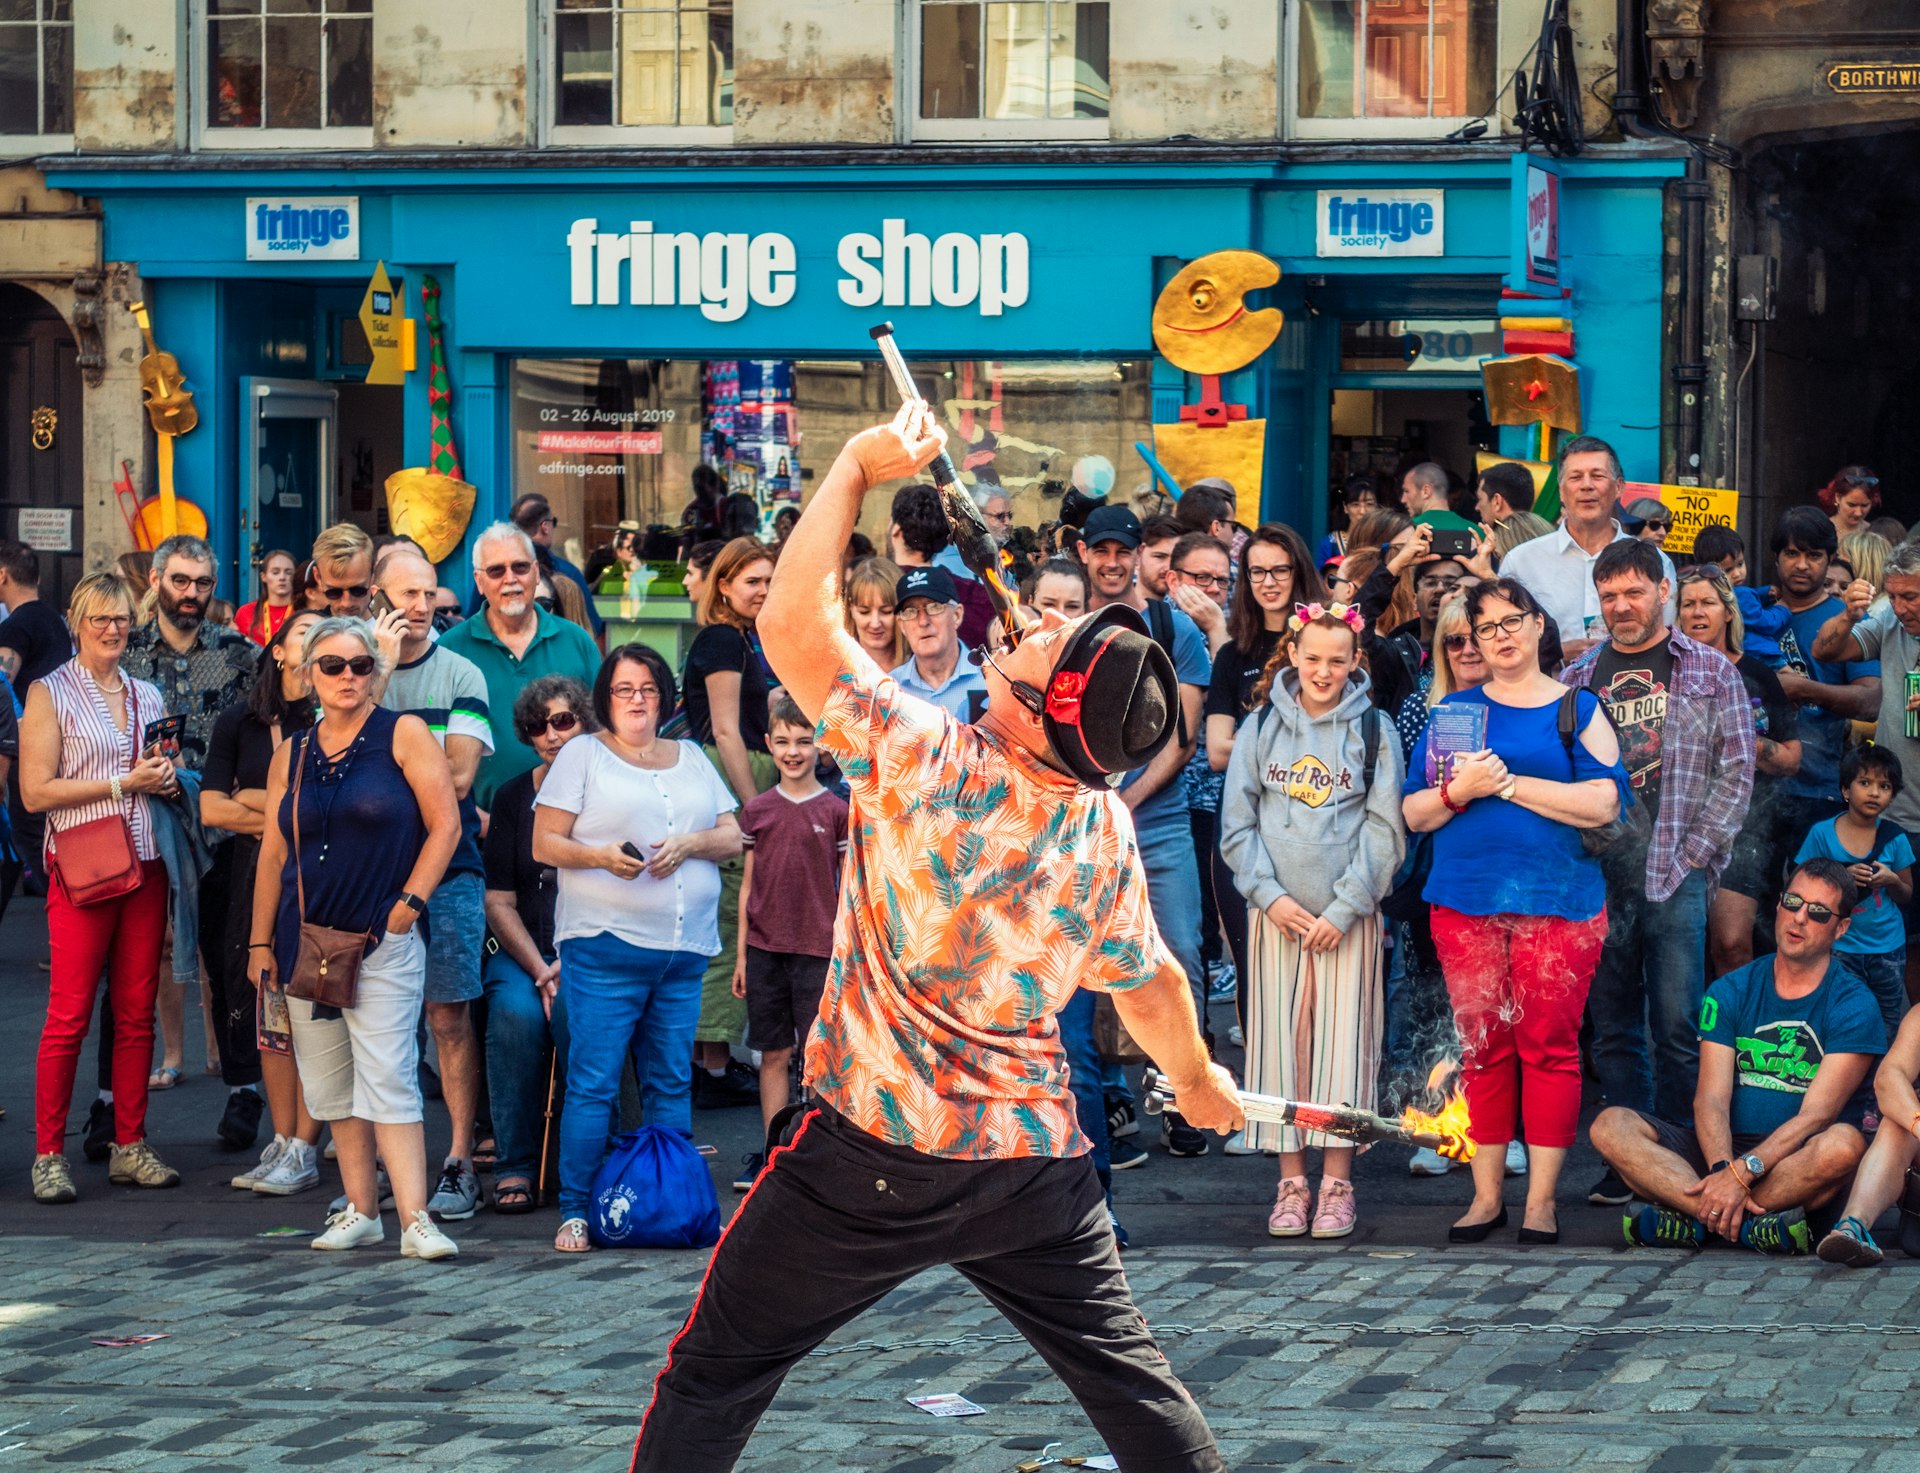 Crowds watch a fire-eating street performer during the Edinburgh Festival, Edinburgh, Scotland, United Kingdom